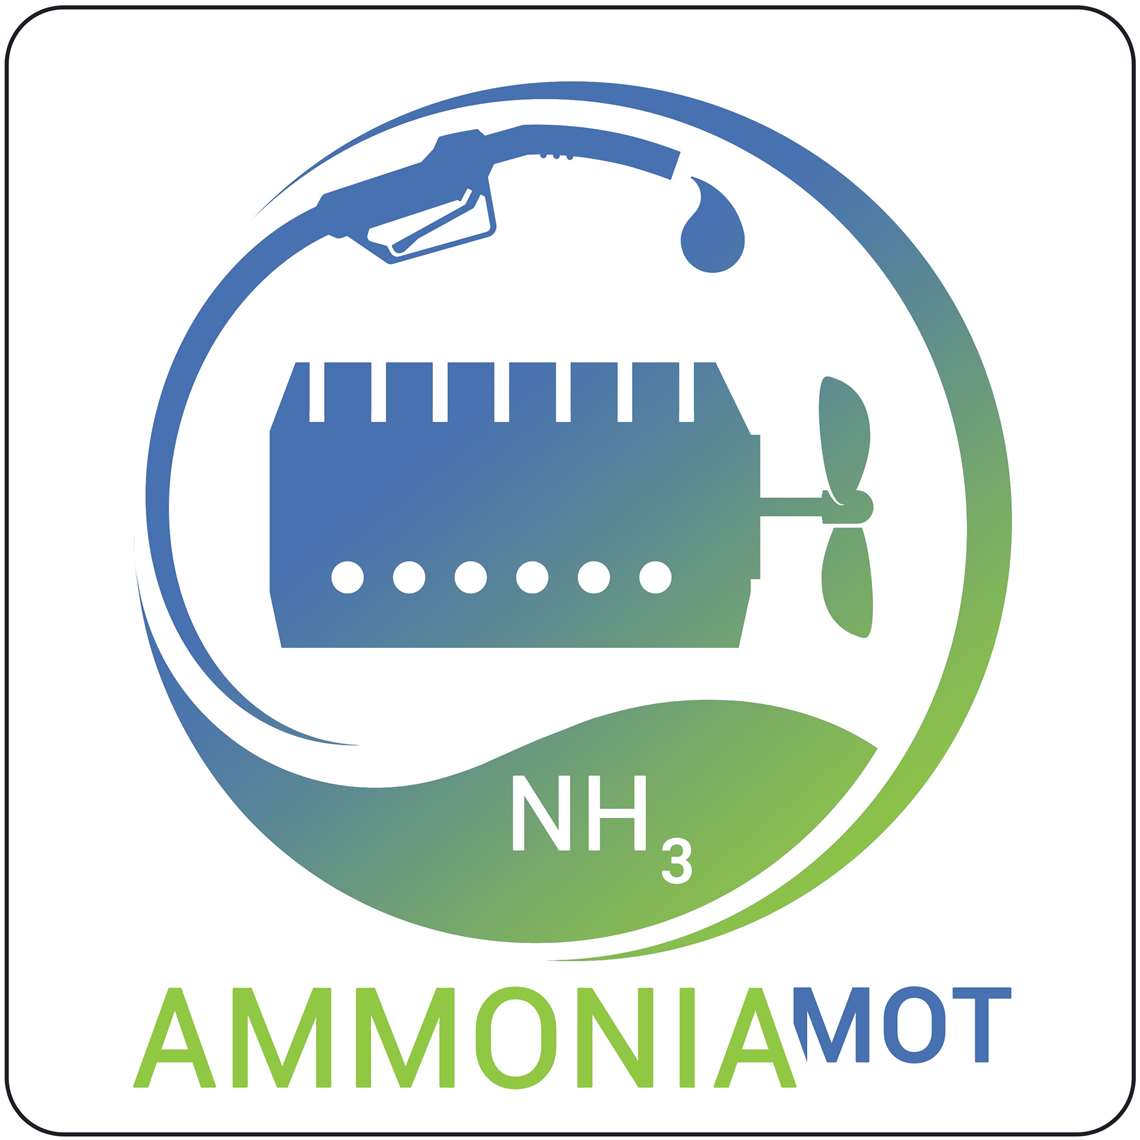 AmmoniaMot logo